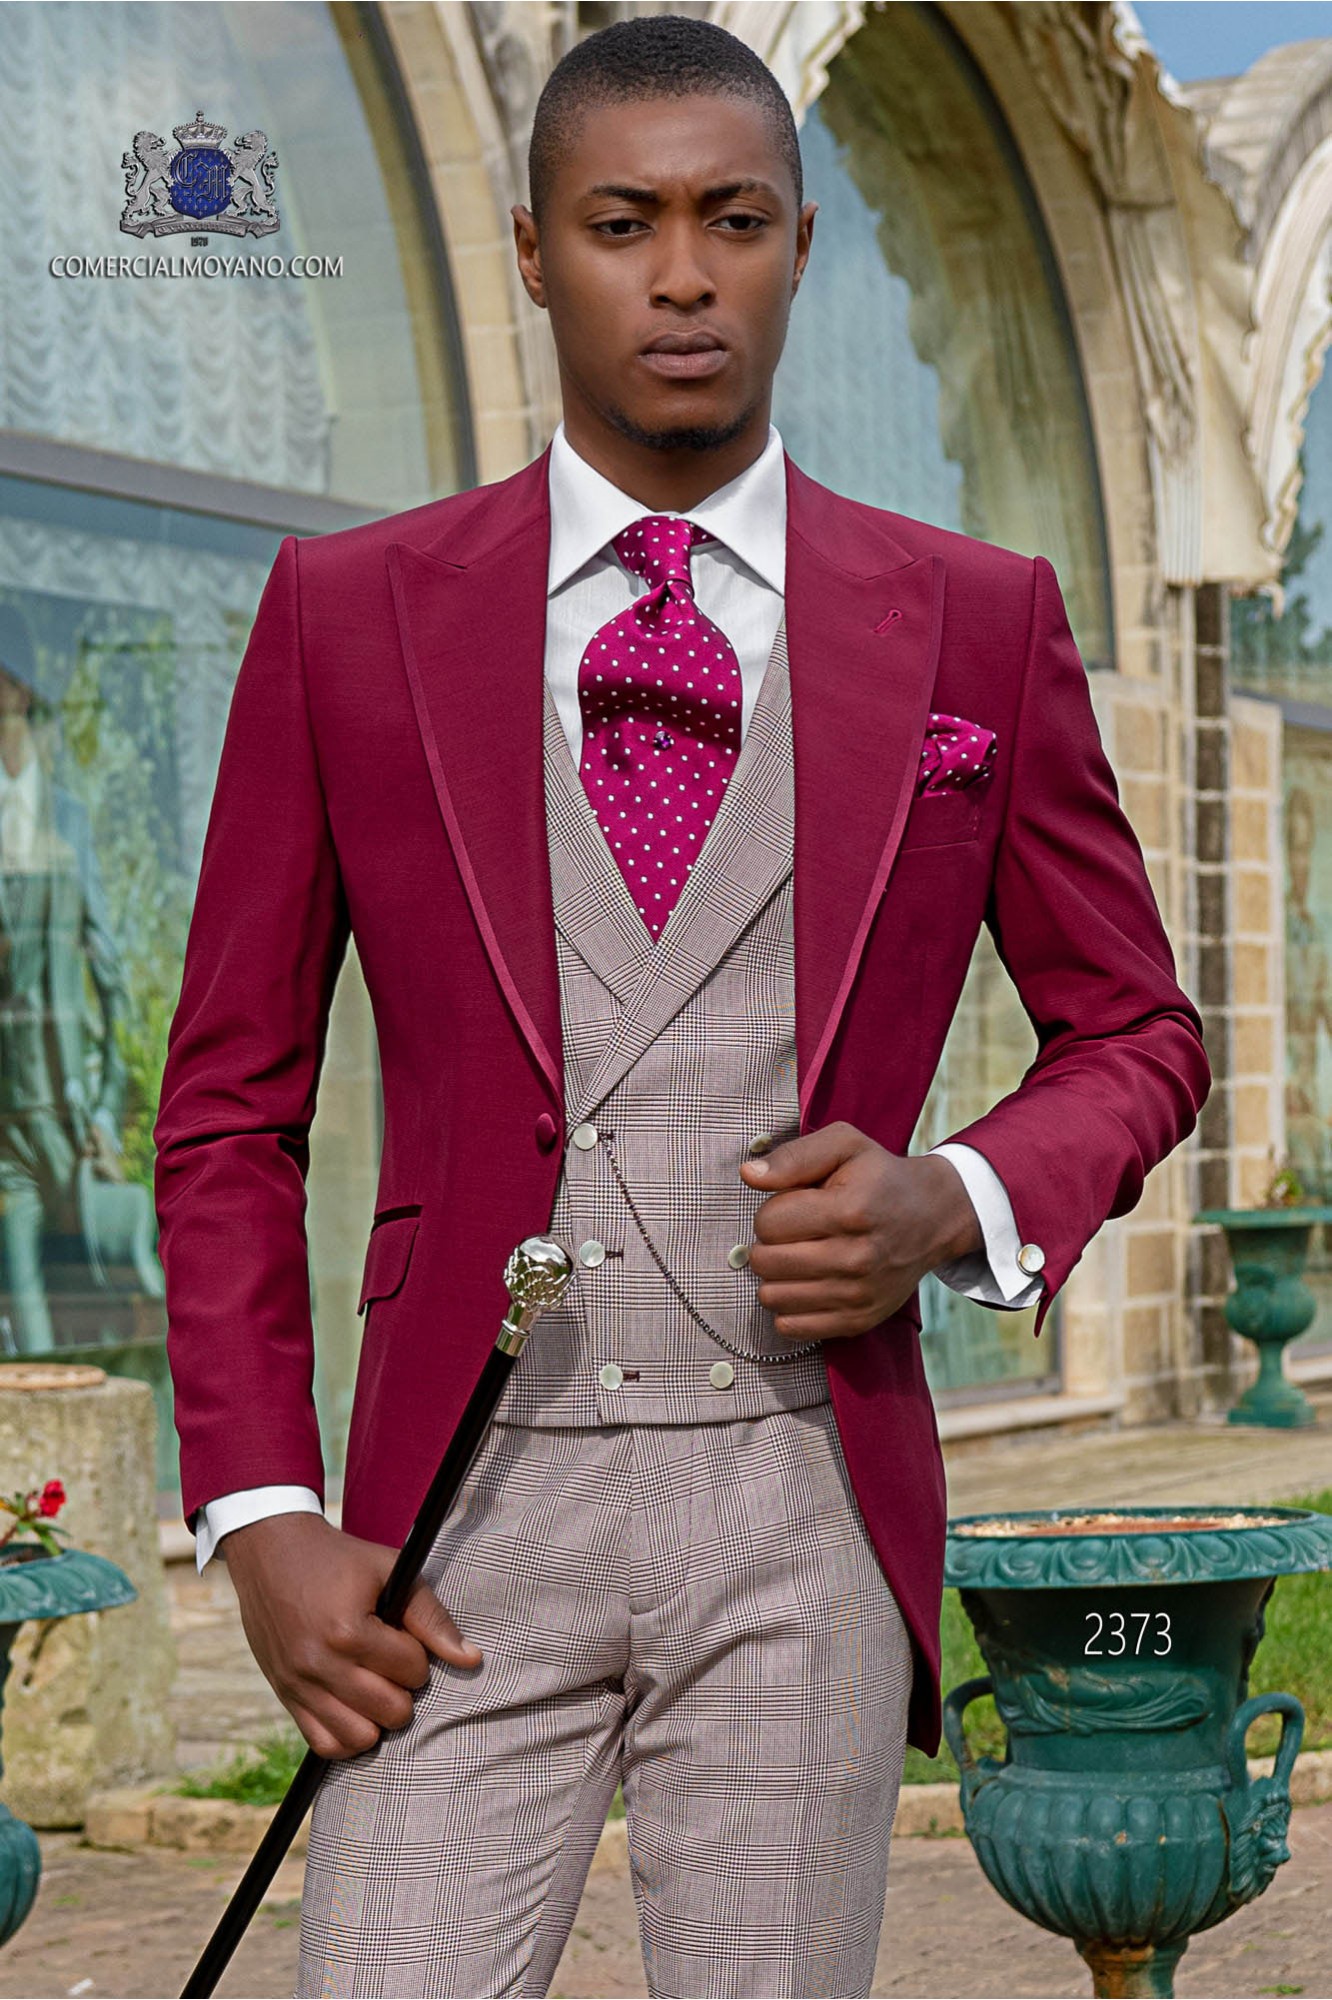 Semilevita color borgoña con pantalón y chaleco príncipe de gales borgoña modelo: 2373 Mario Moyano colección Gentleman